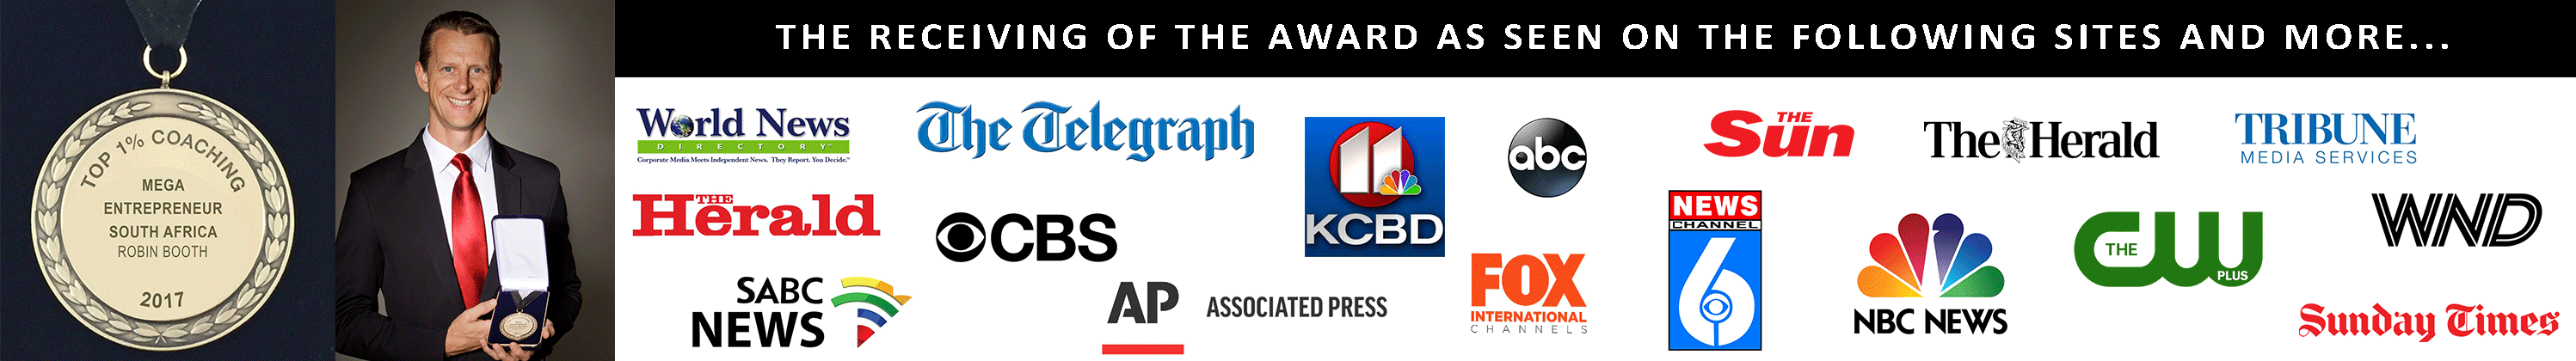 media logos few award